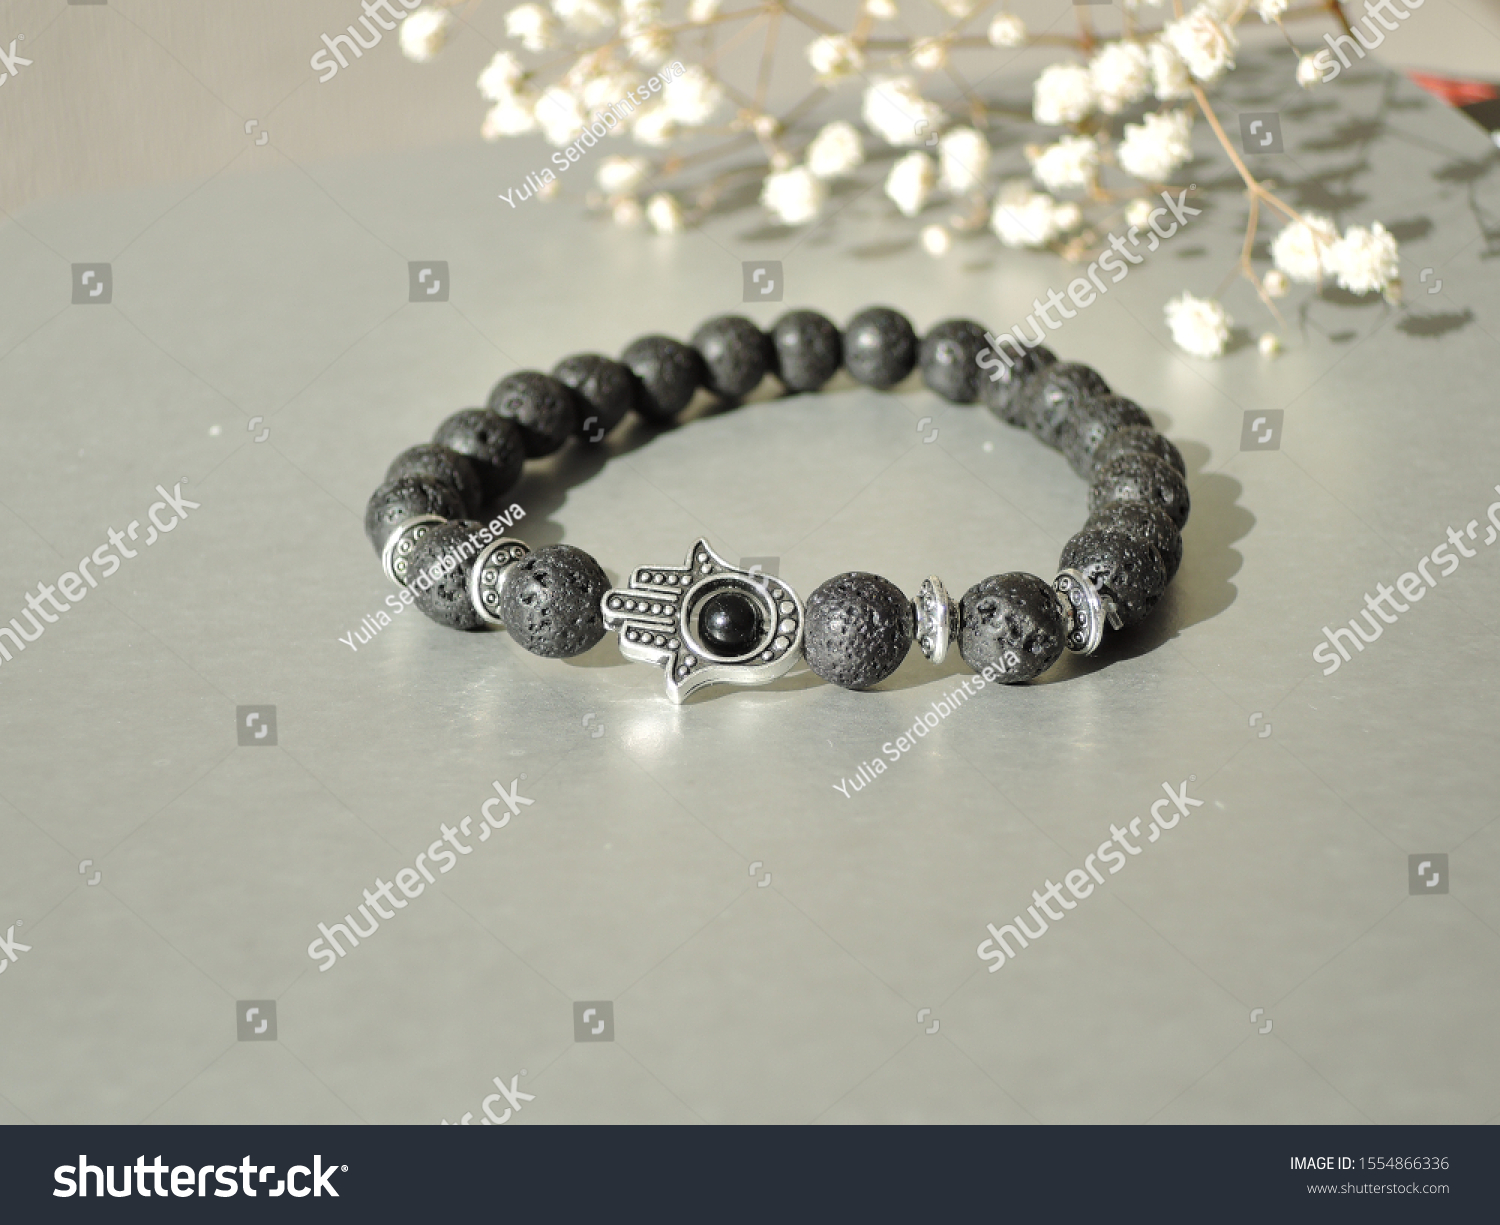 Fashionable bracelets with lava stone and pendants hamsa #1554866336